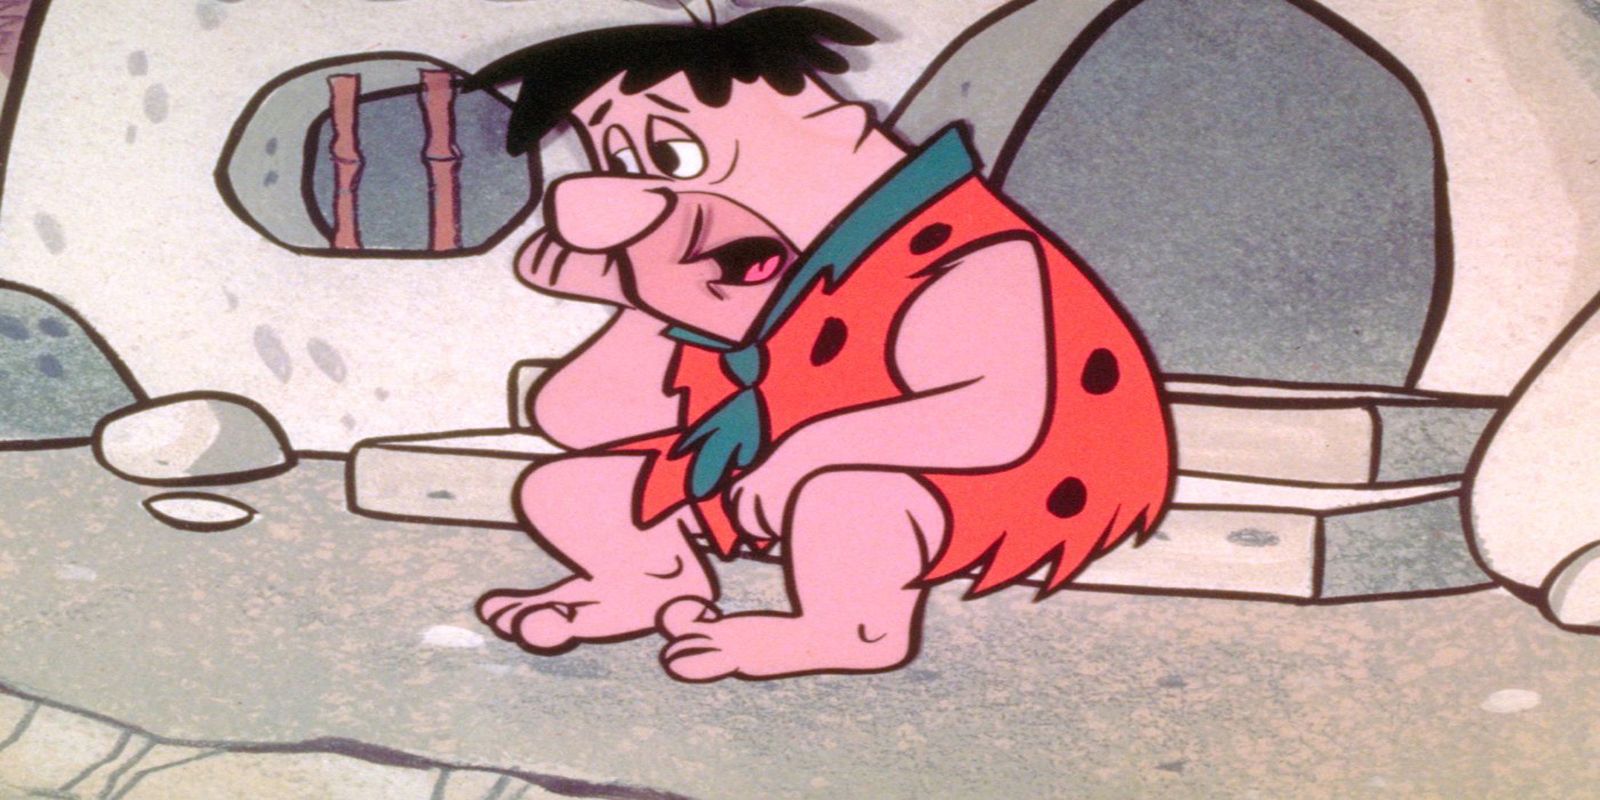 10 Hilarious Ways The Flintstone’s Economy Makes No Sense